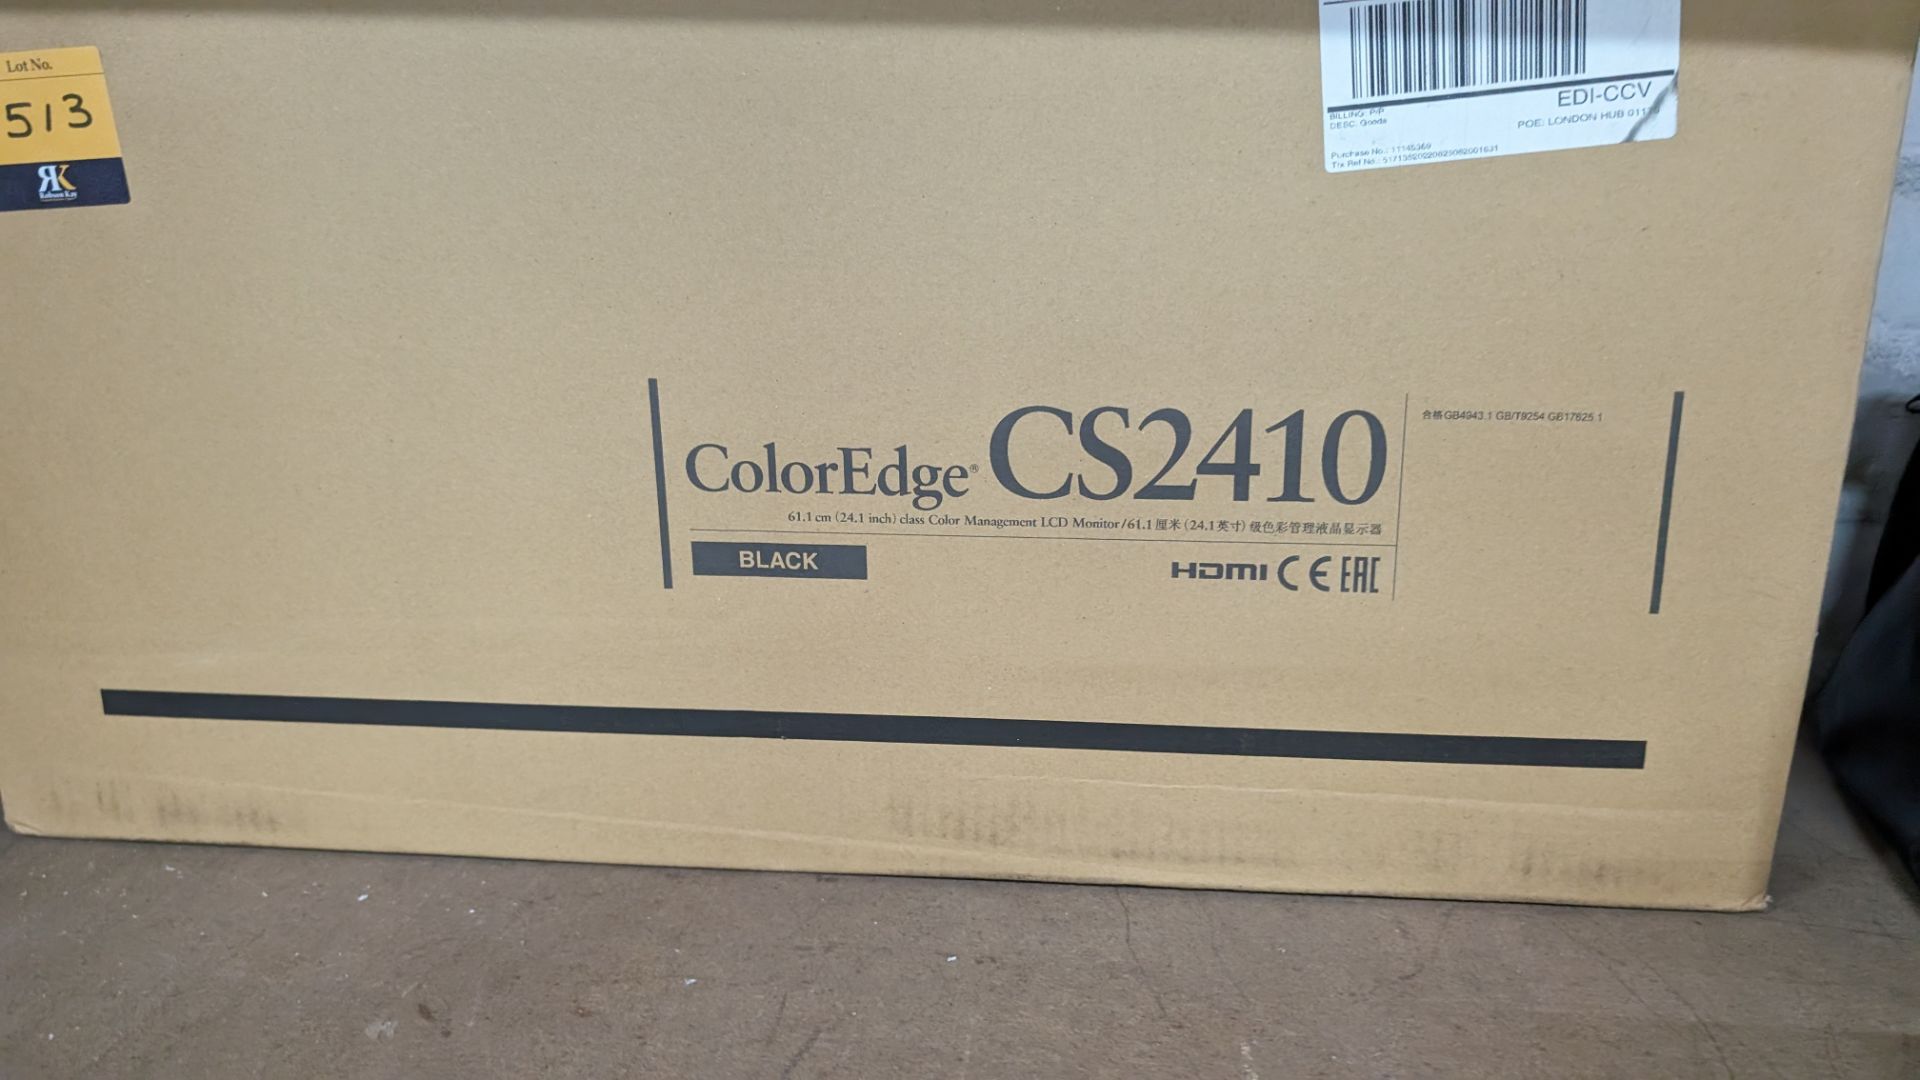 Eizo Color Edge CS2410 24.1" widescreen LCD monitor - Image 3 of 6